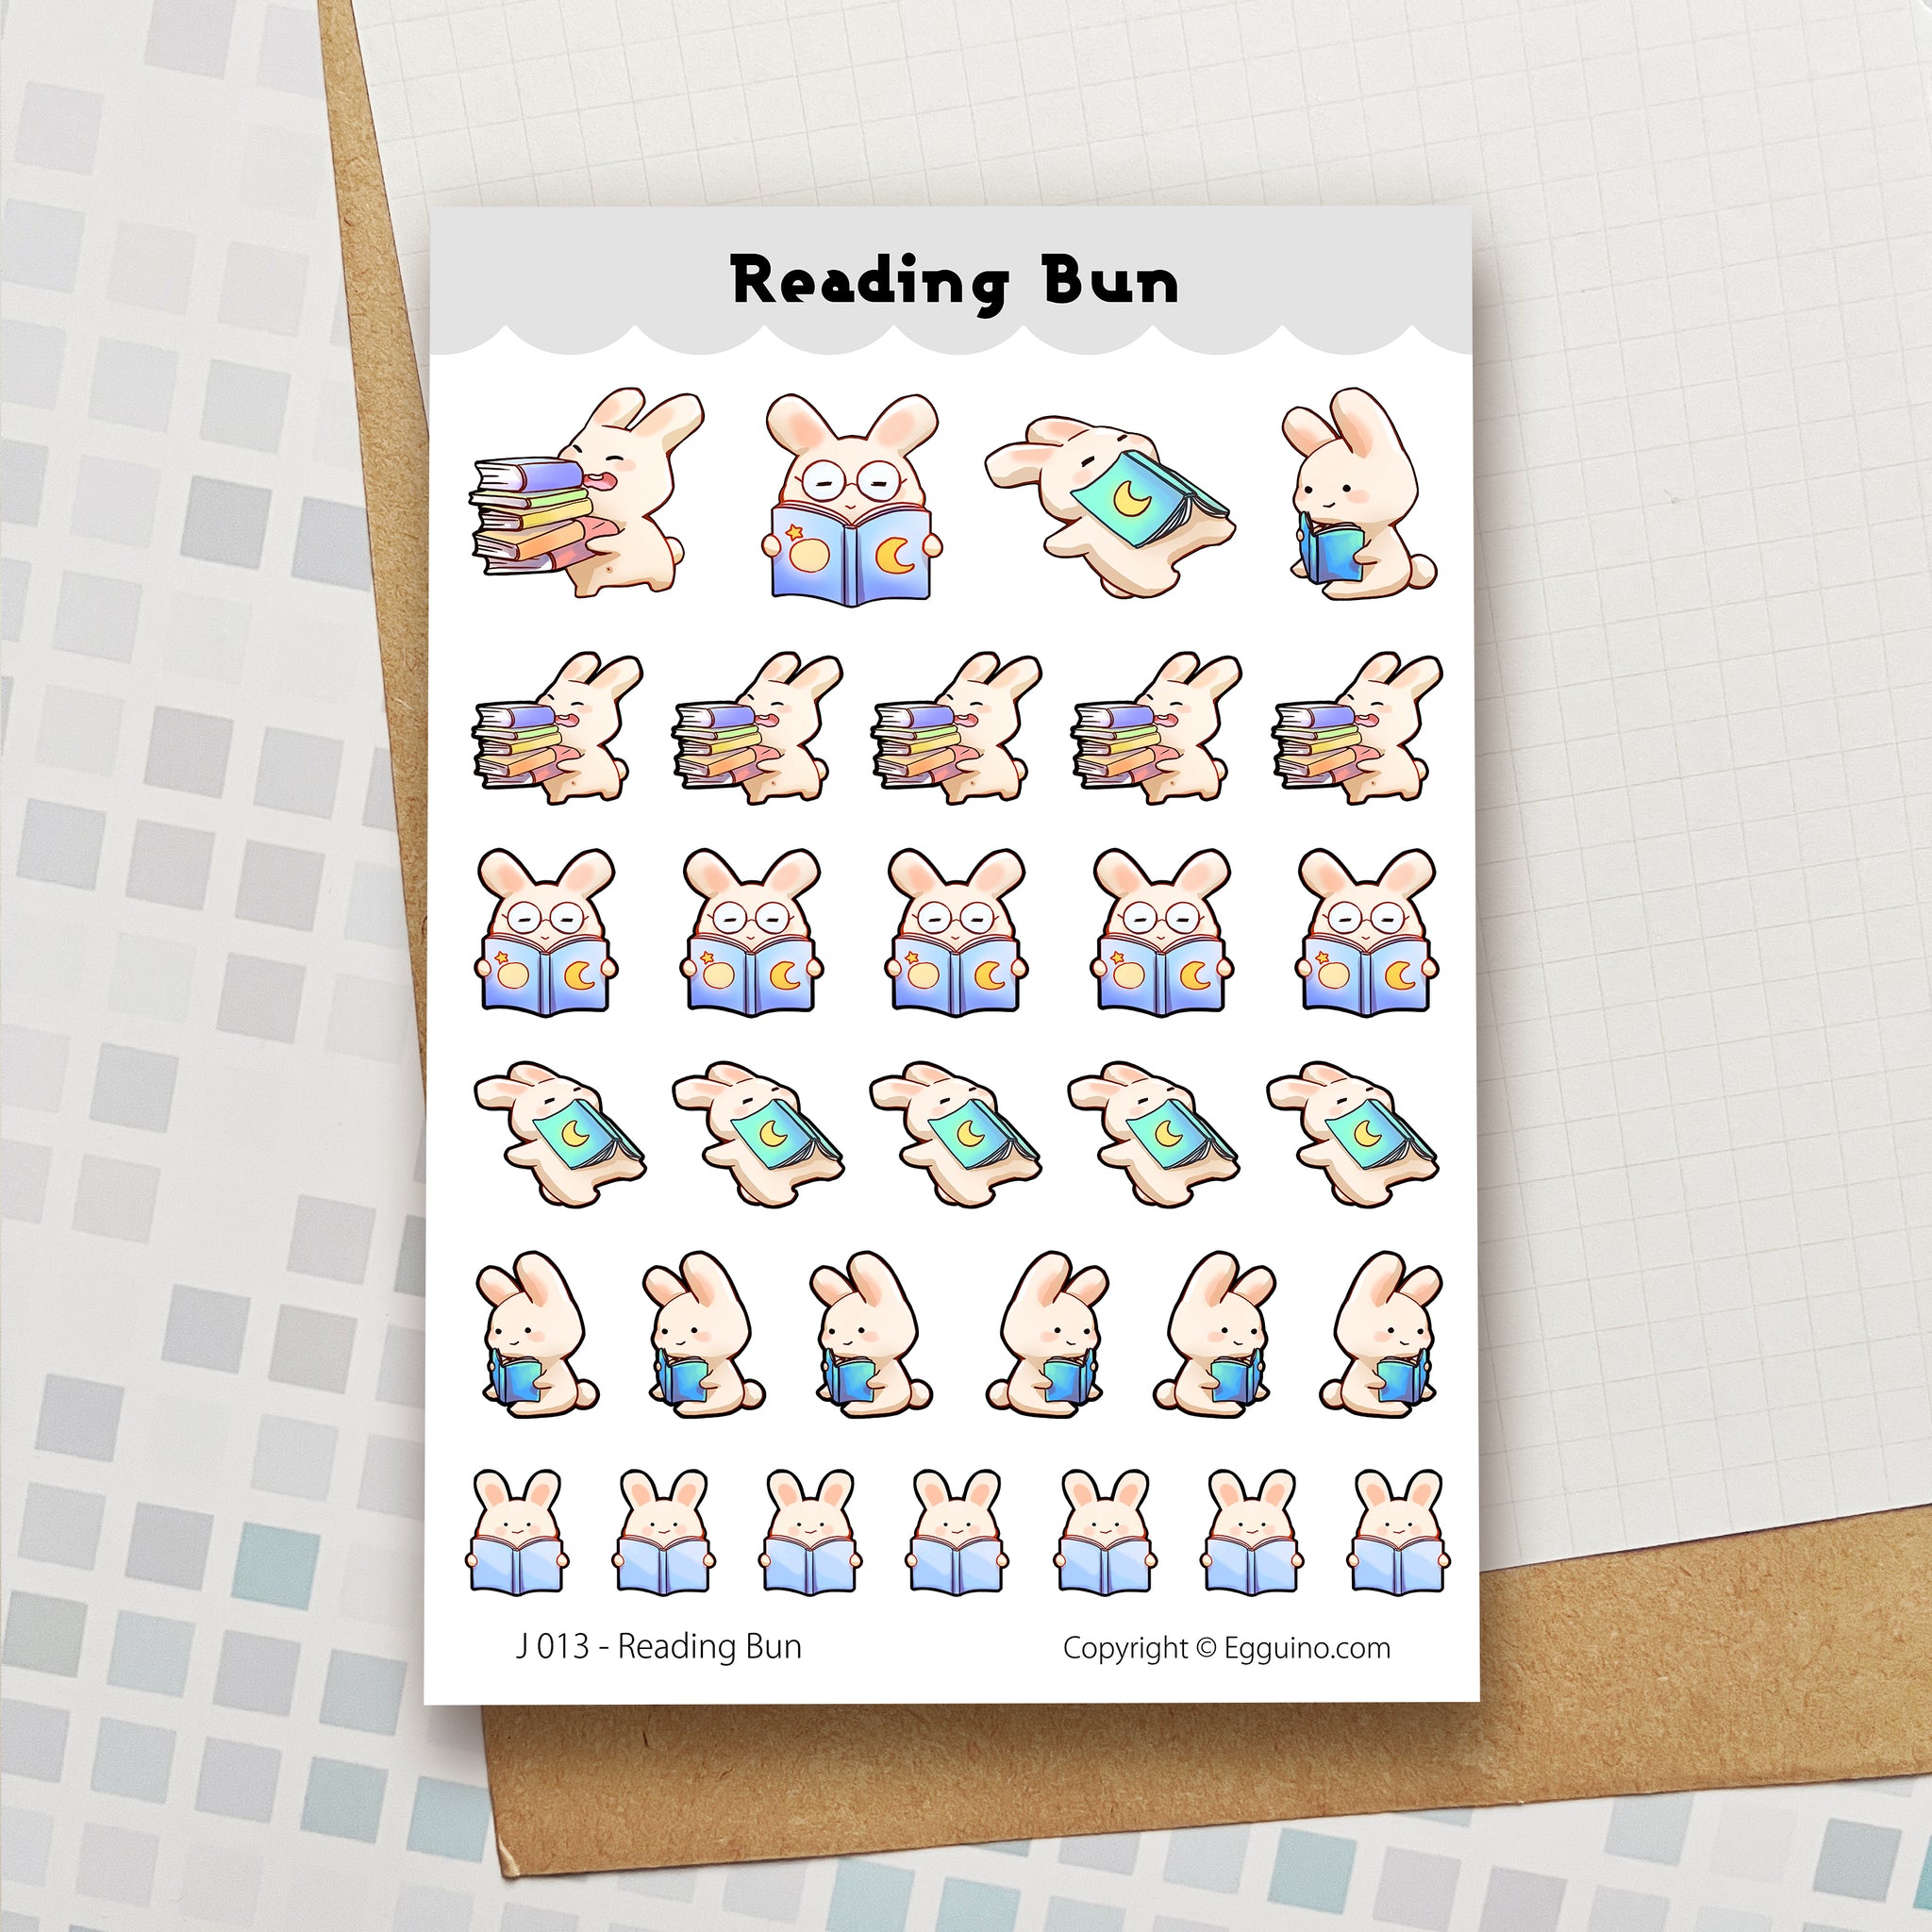 Bonbun The Bunny Sticker Sheet - BON004 – Katnipp Studios